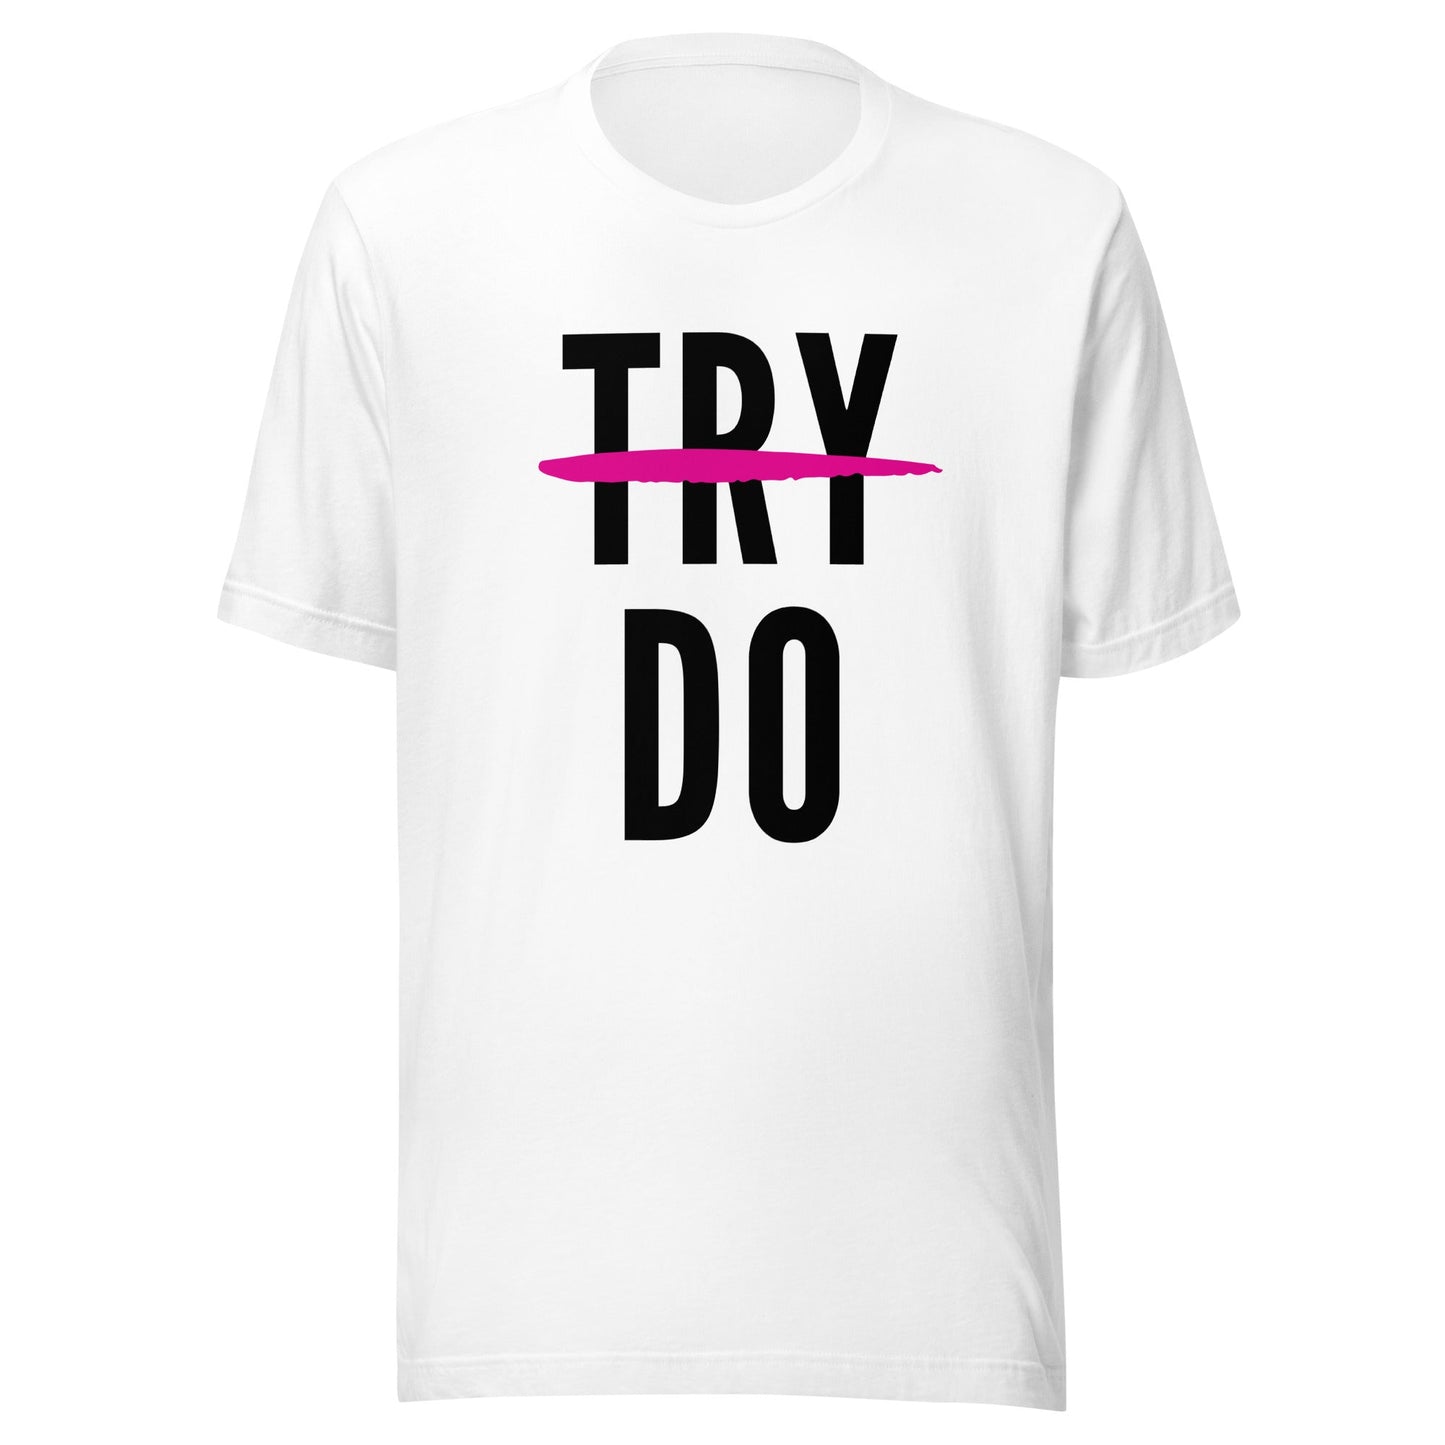 TRY-DO - Unisex t-shirt - lilaloop - T-shirt